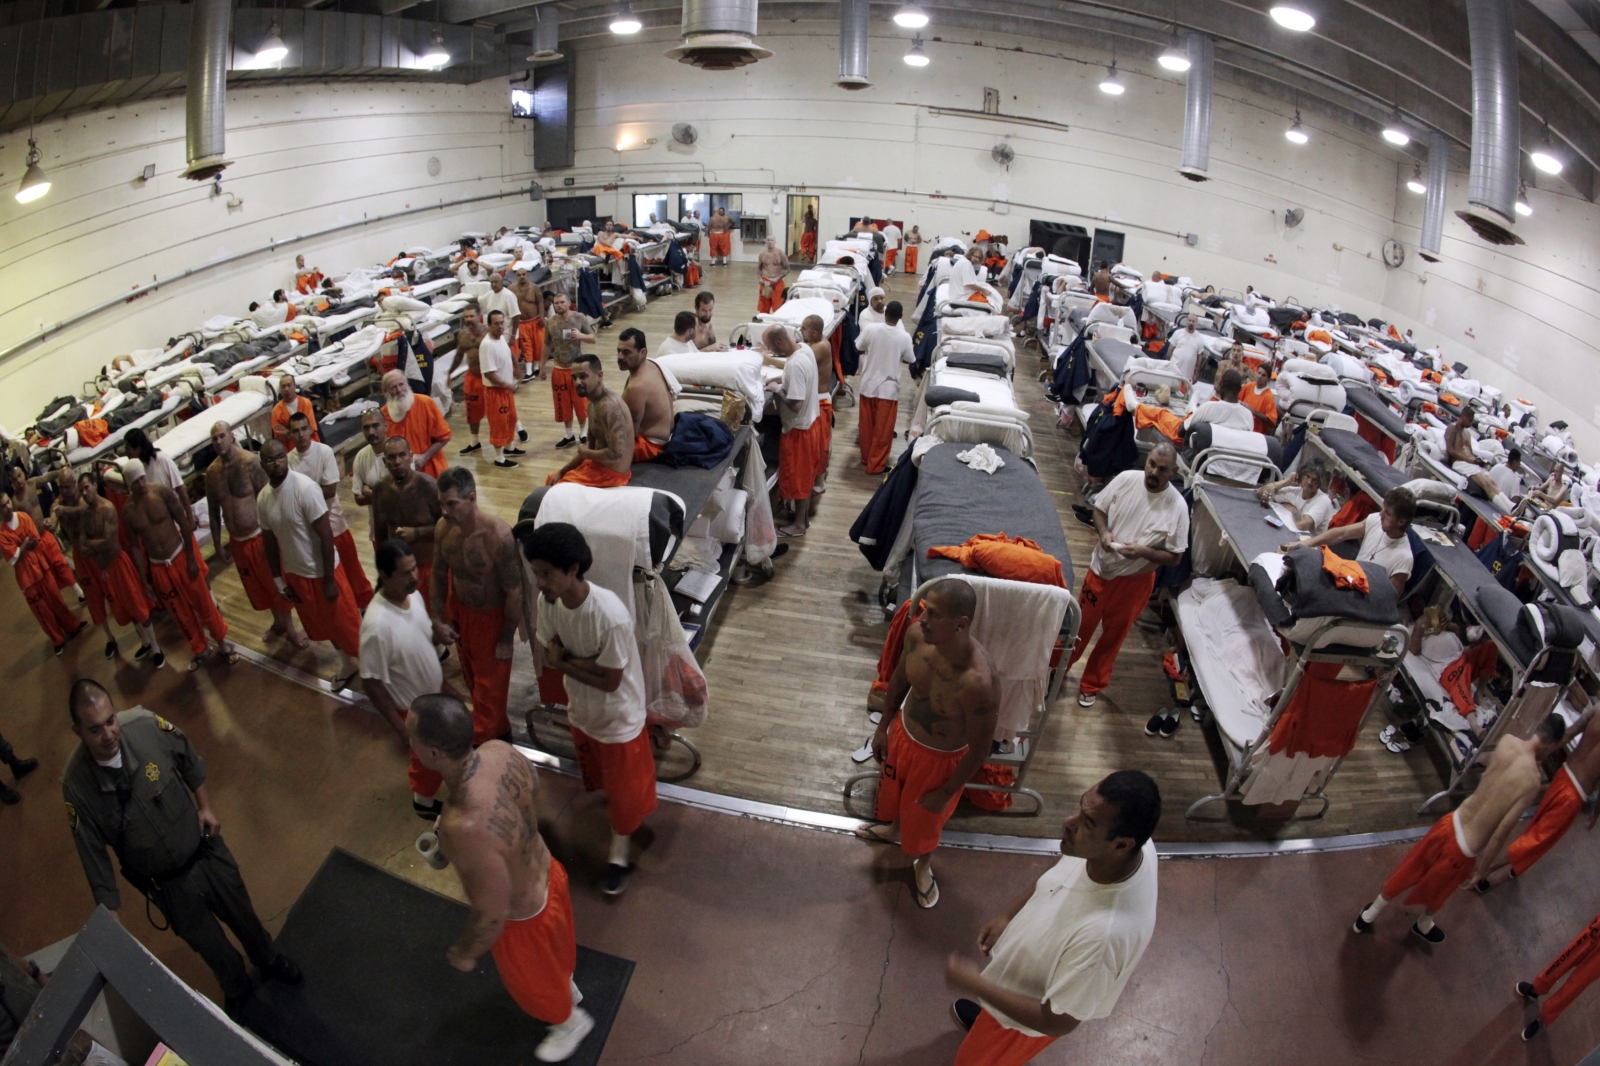 US Prison inmates